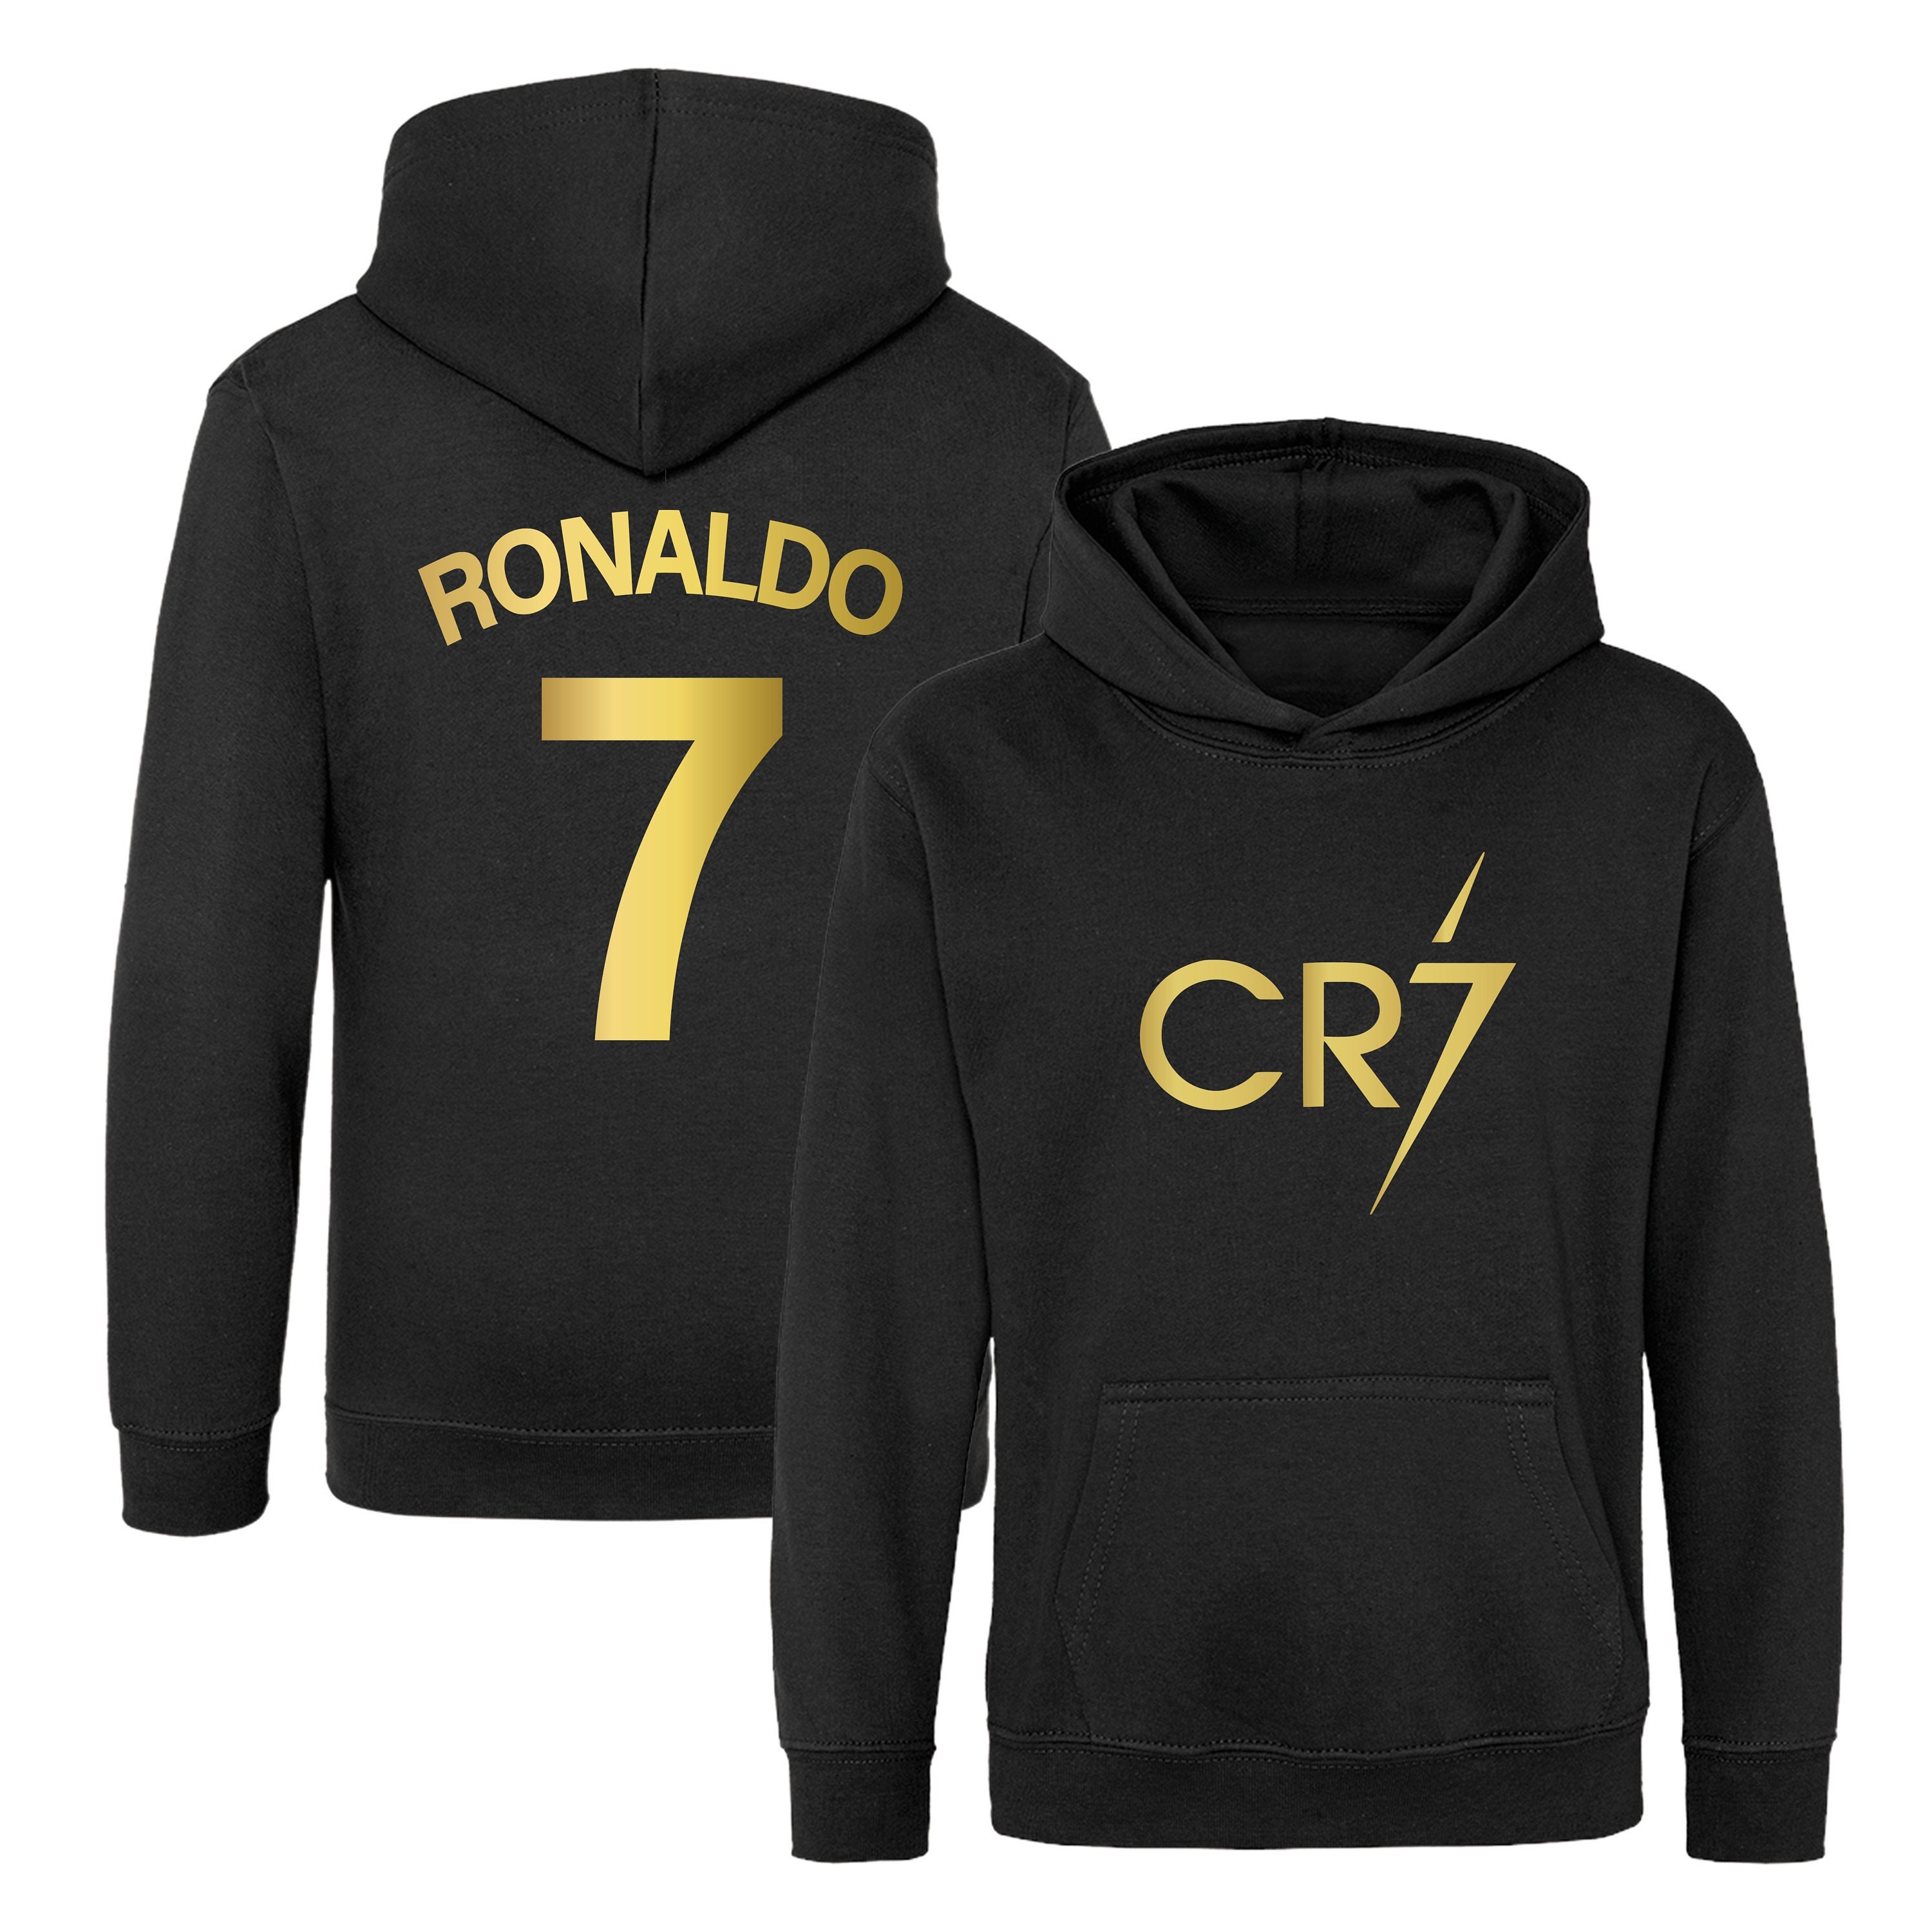 Ronaldo Clothing -  Canada